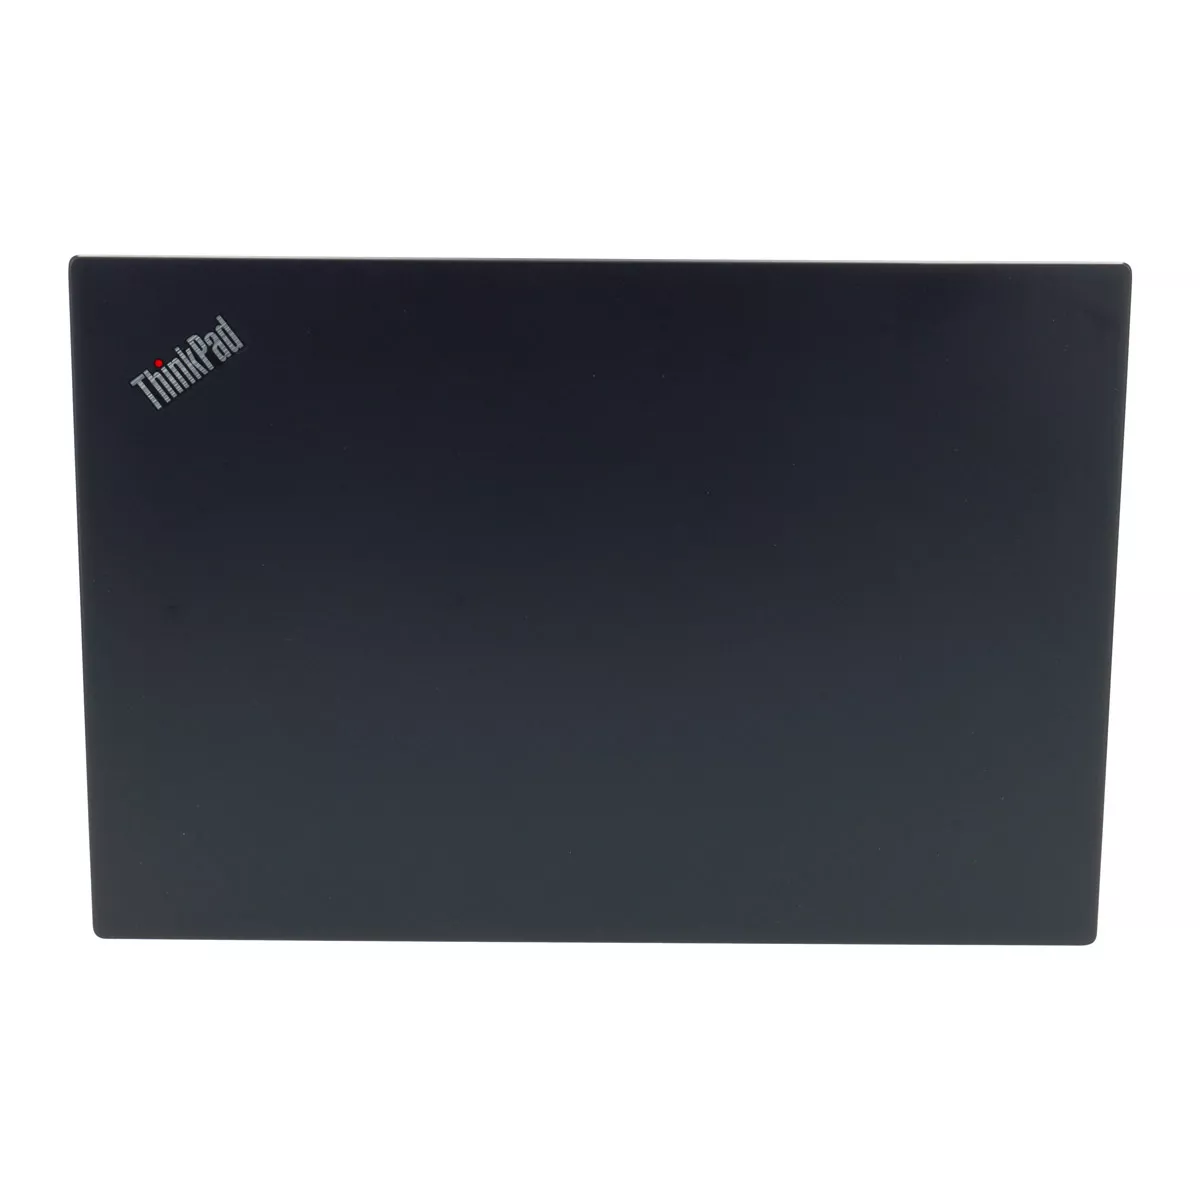 Lenovo ThinkPad T495 AMD Ryzen 7 Pro 3700U Full-HD Touch 500 GB M.2 nVME SSD Webcam A